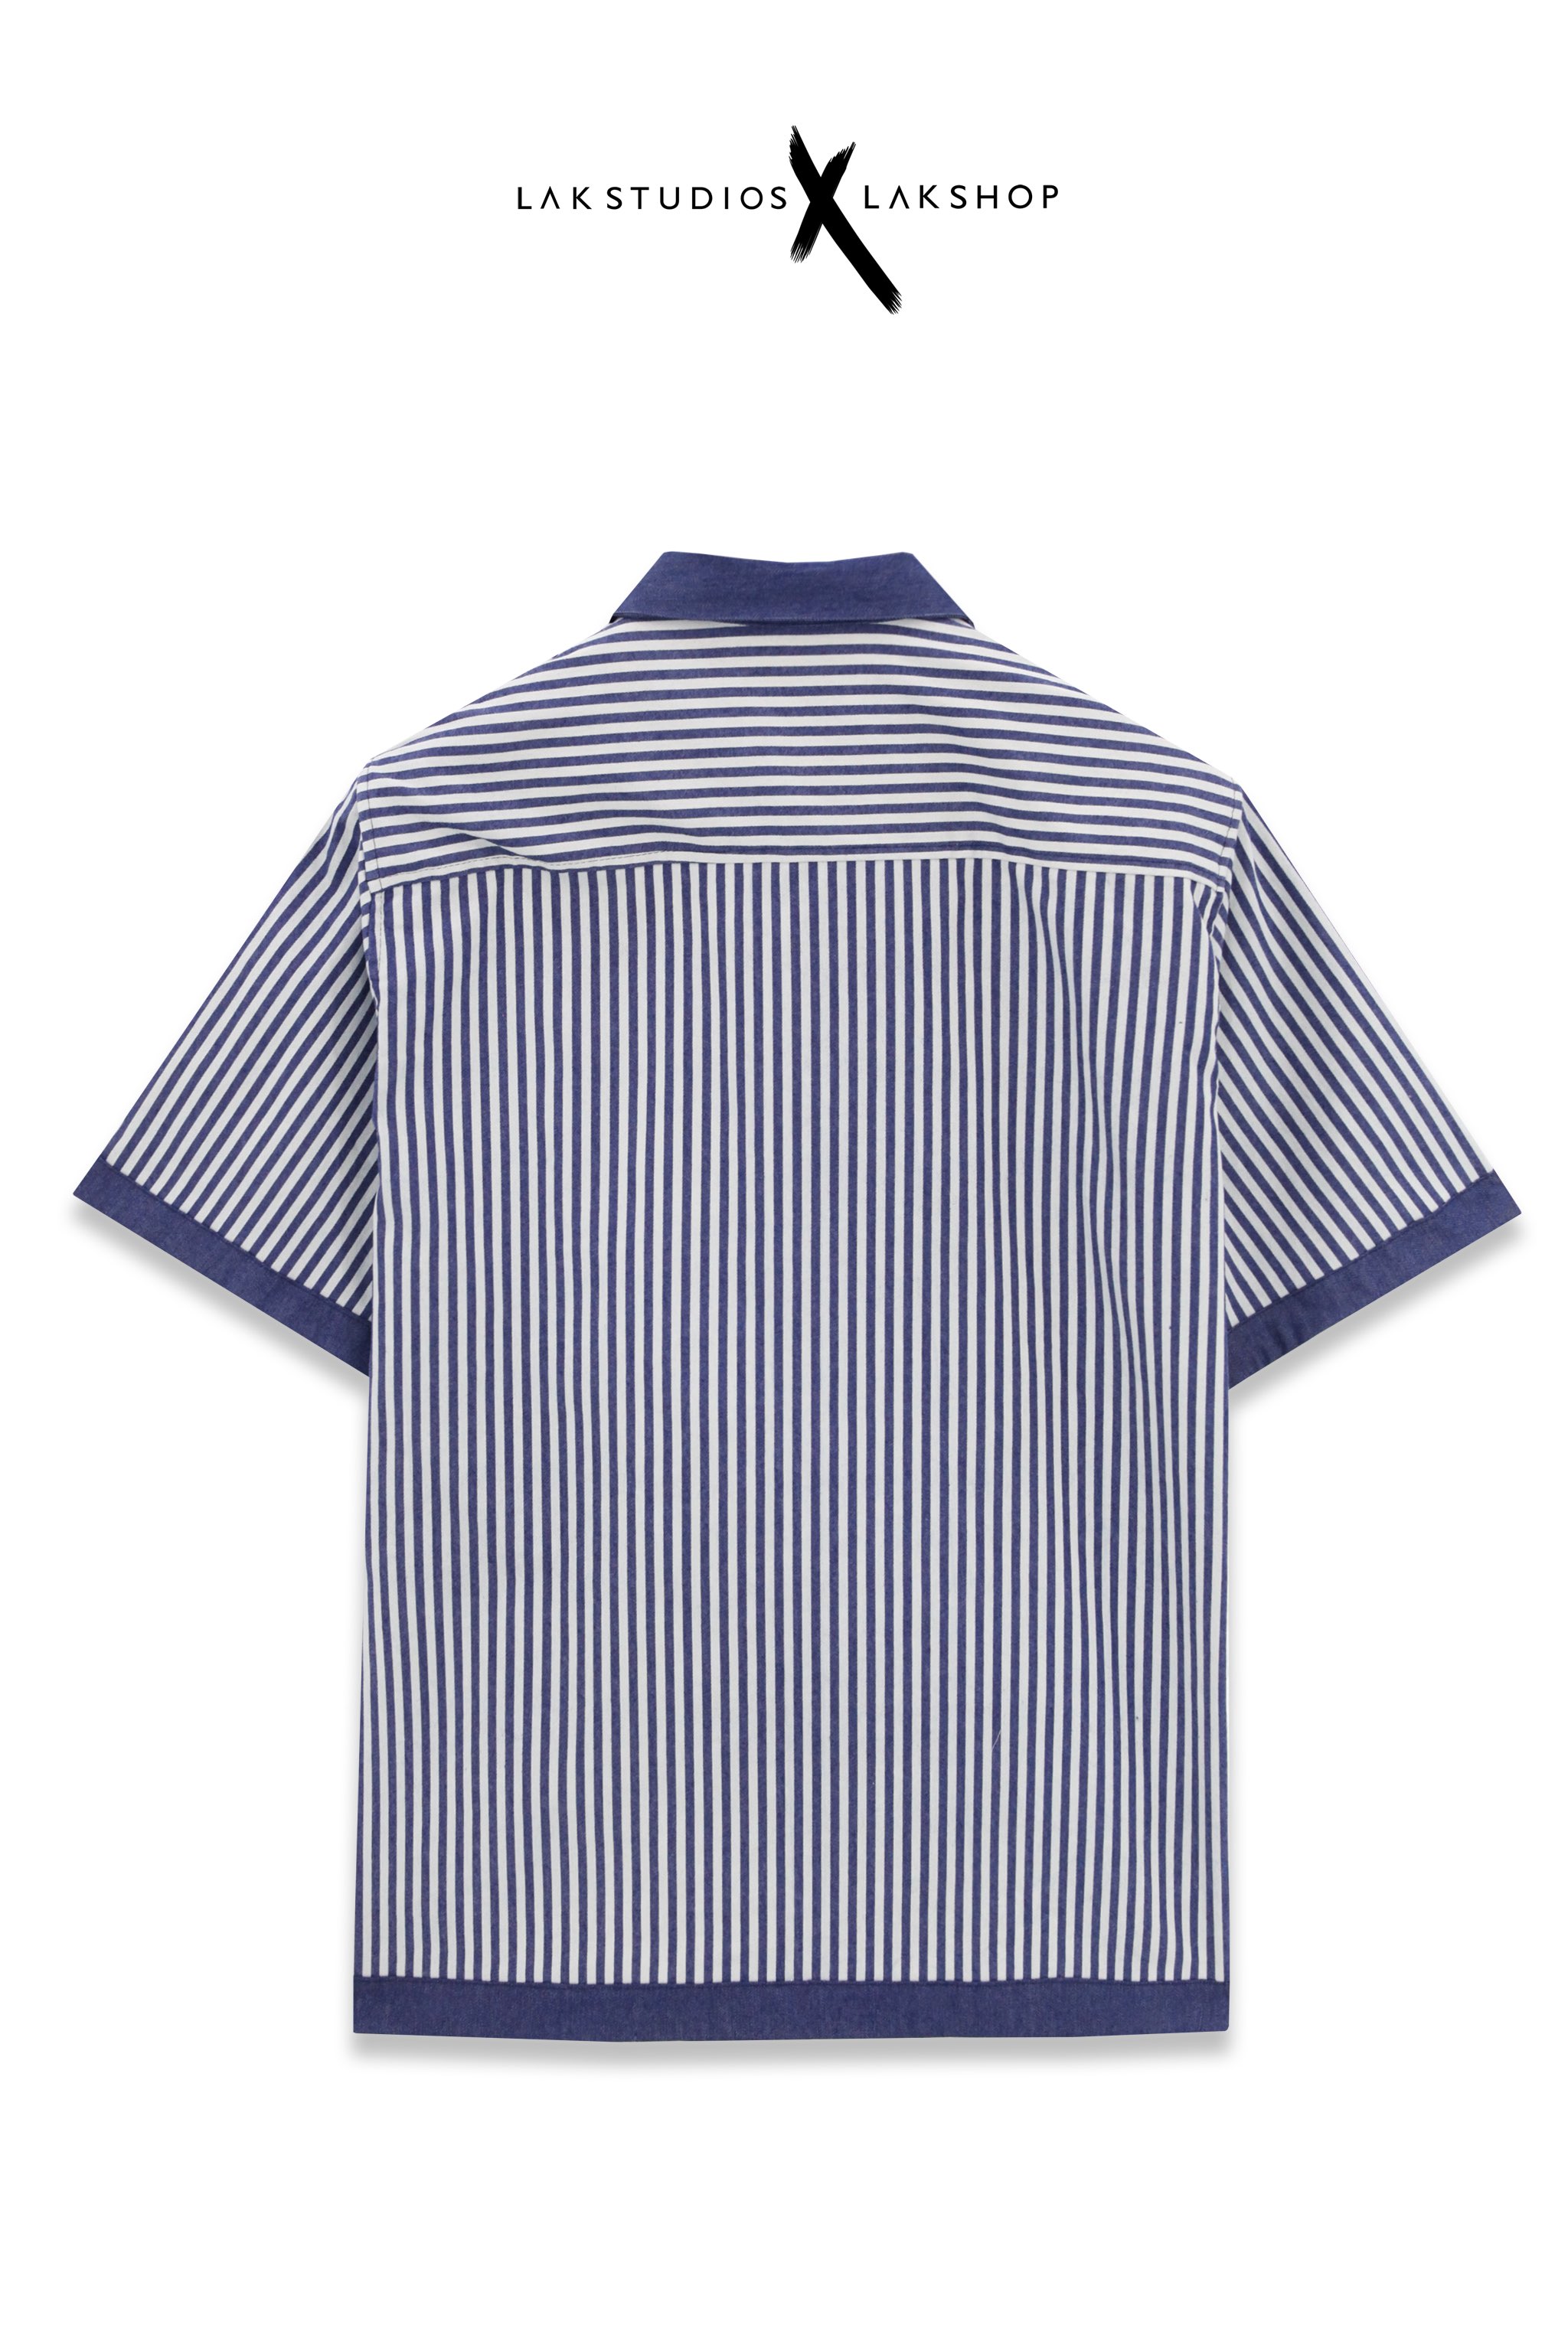 Lak Studios Blue Stripe Denim Shirt cs2